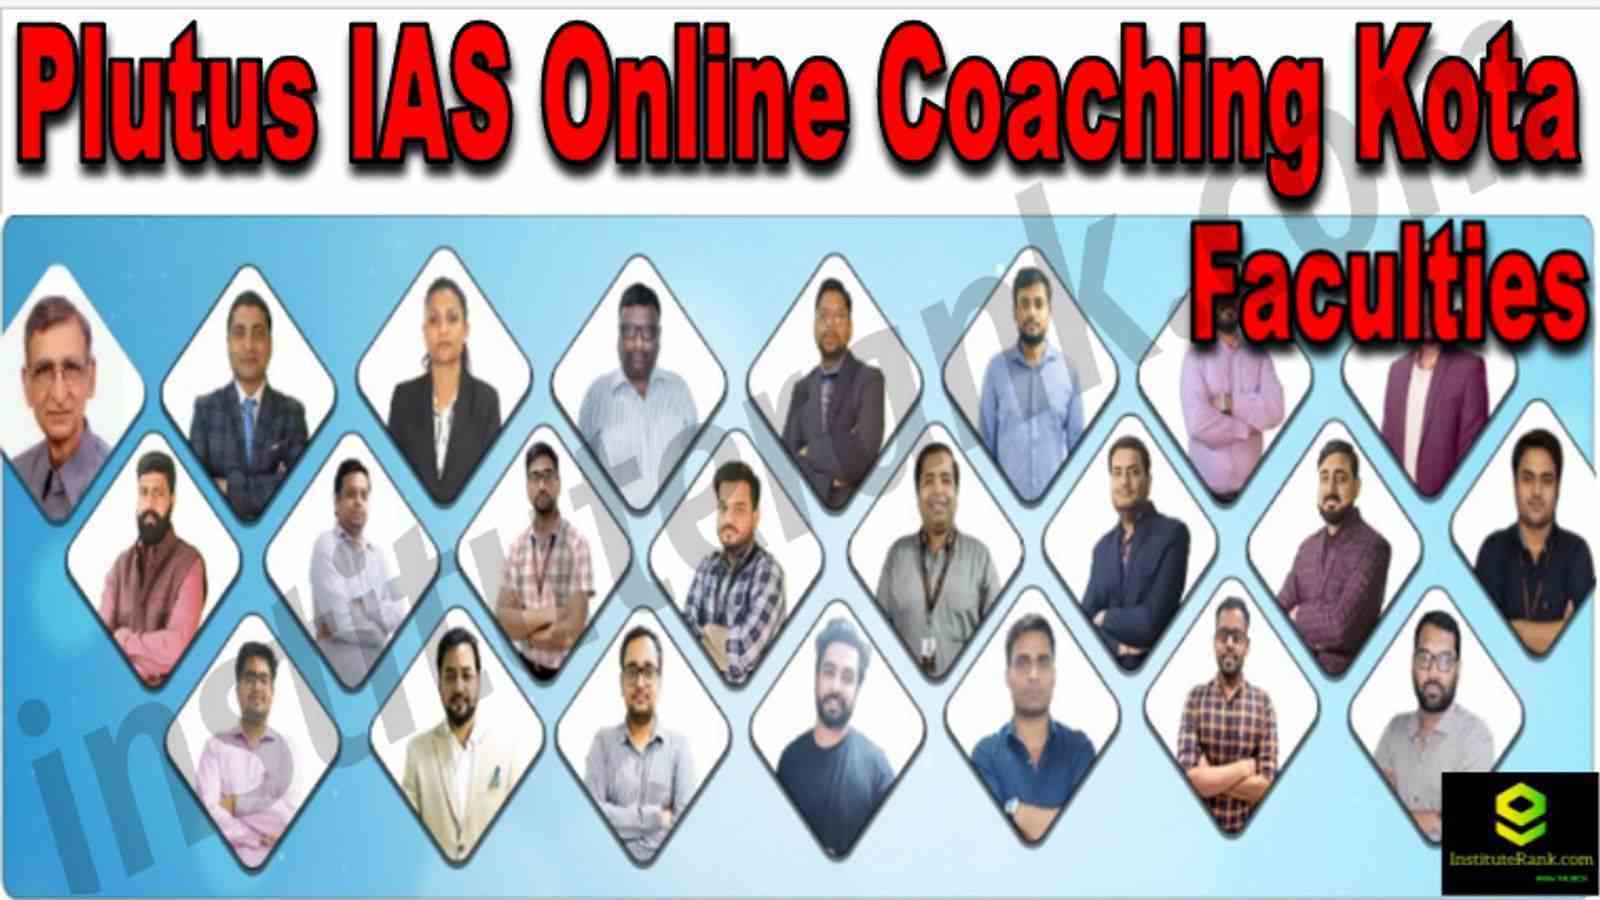 Plutus IAS Online Coaching Kota Reviews Faculties